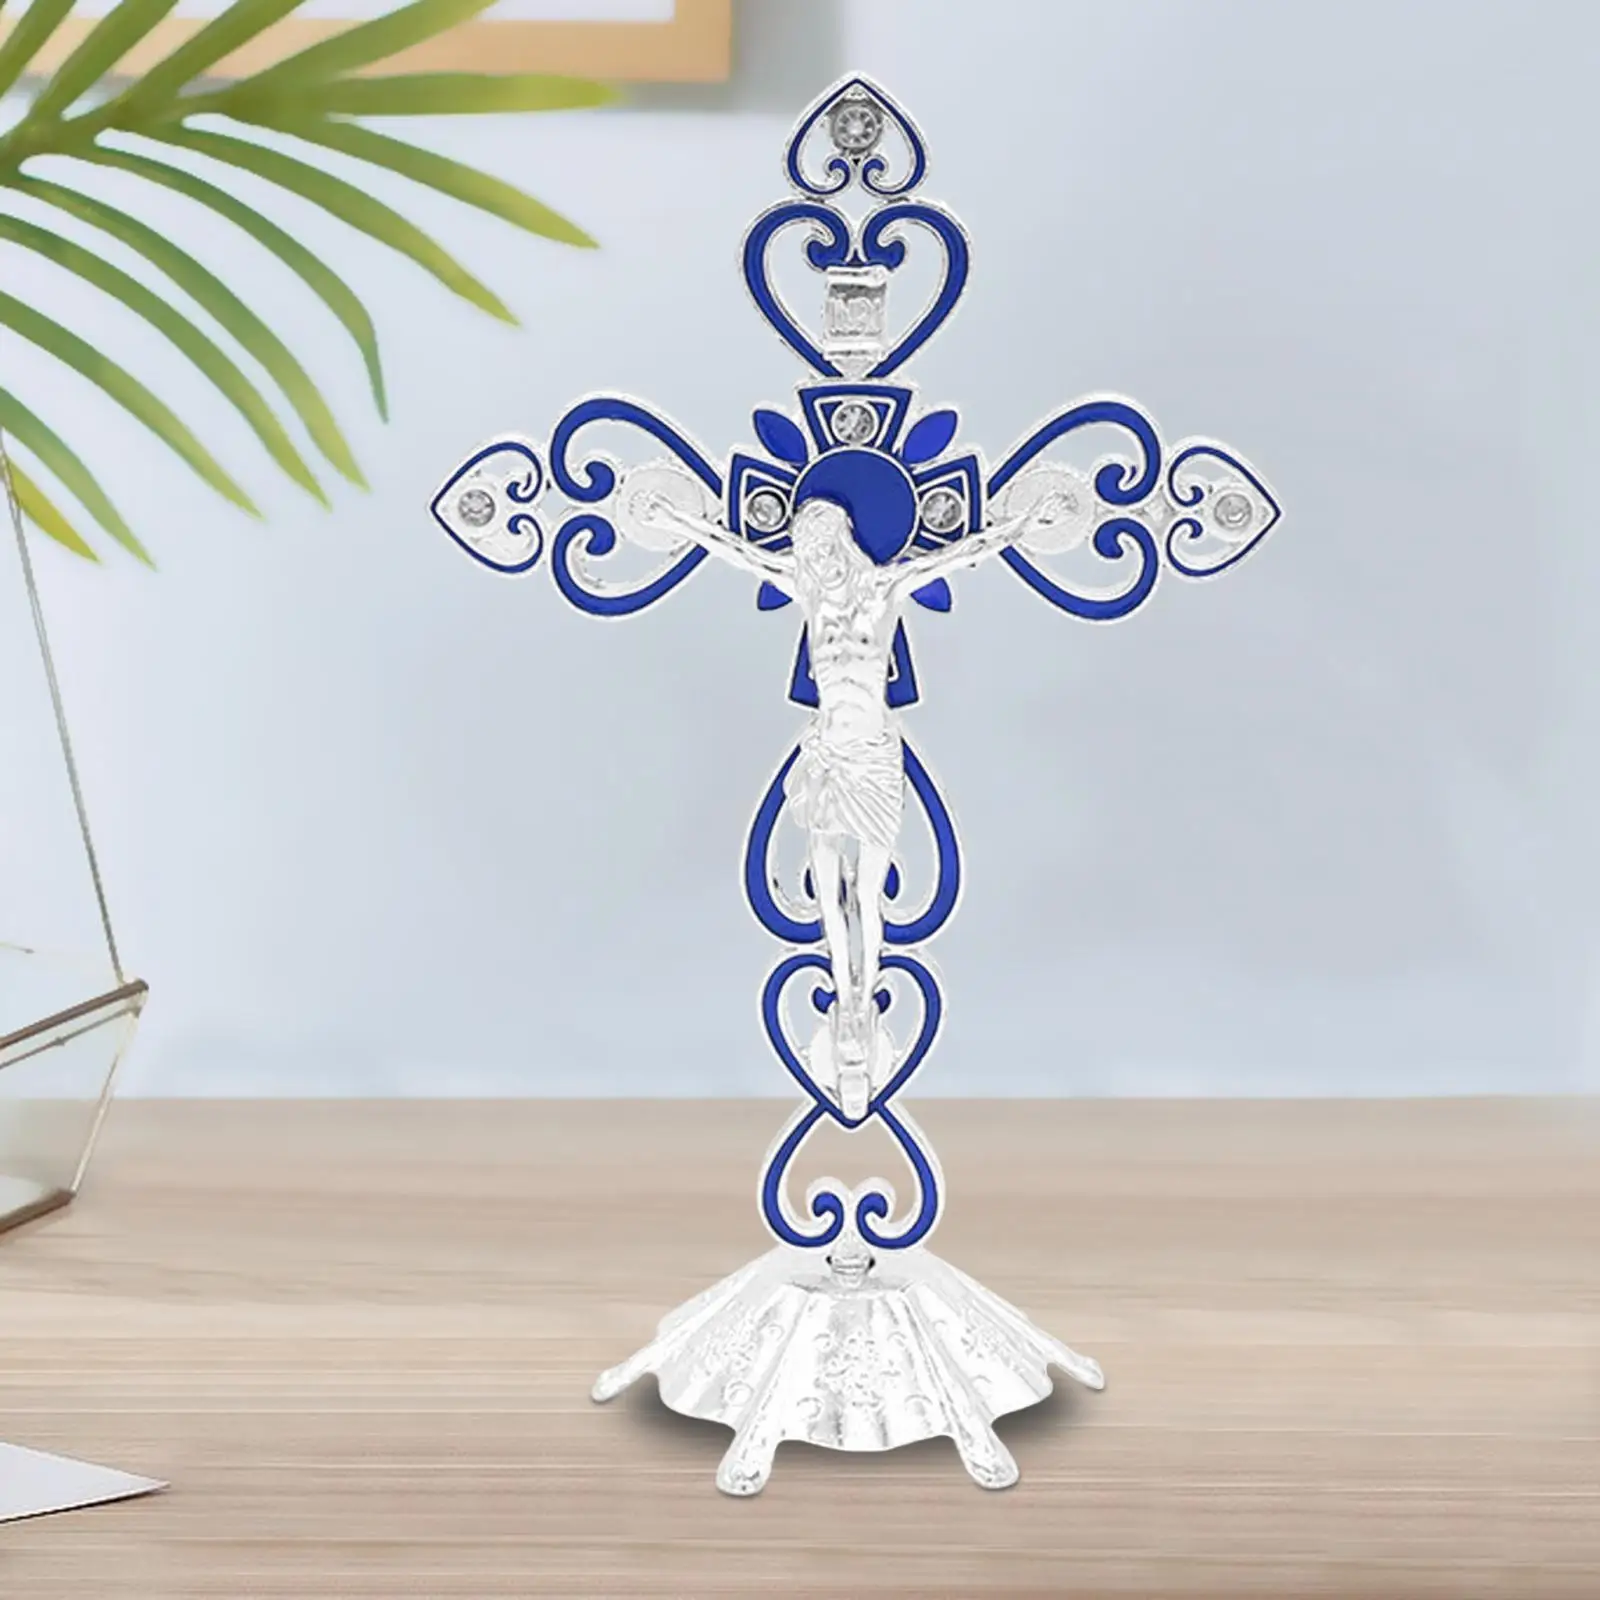 Metal Decorative Crucifix Standing Cross 20cm Tallian Table Decoration Portable for Prayer Jesus Cross Removable Bracket